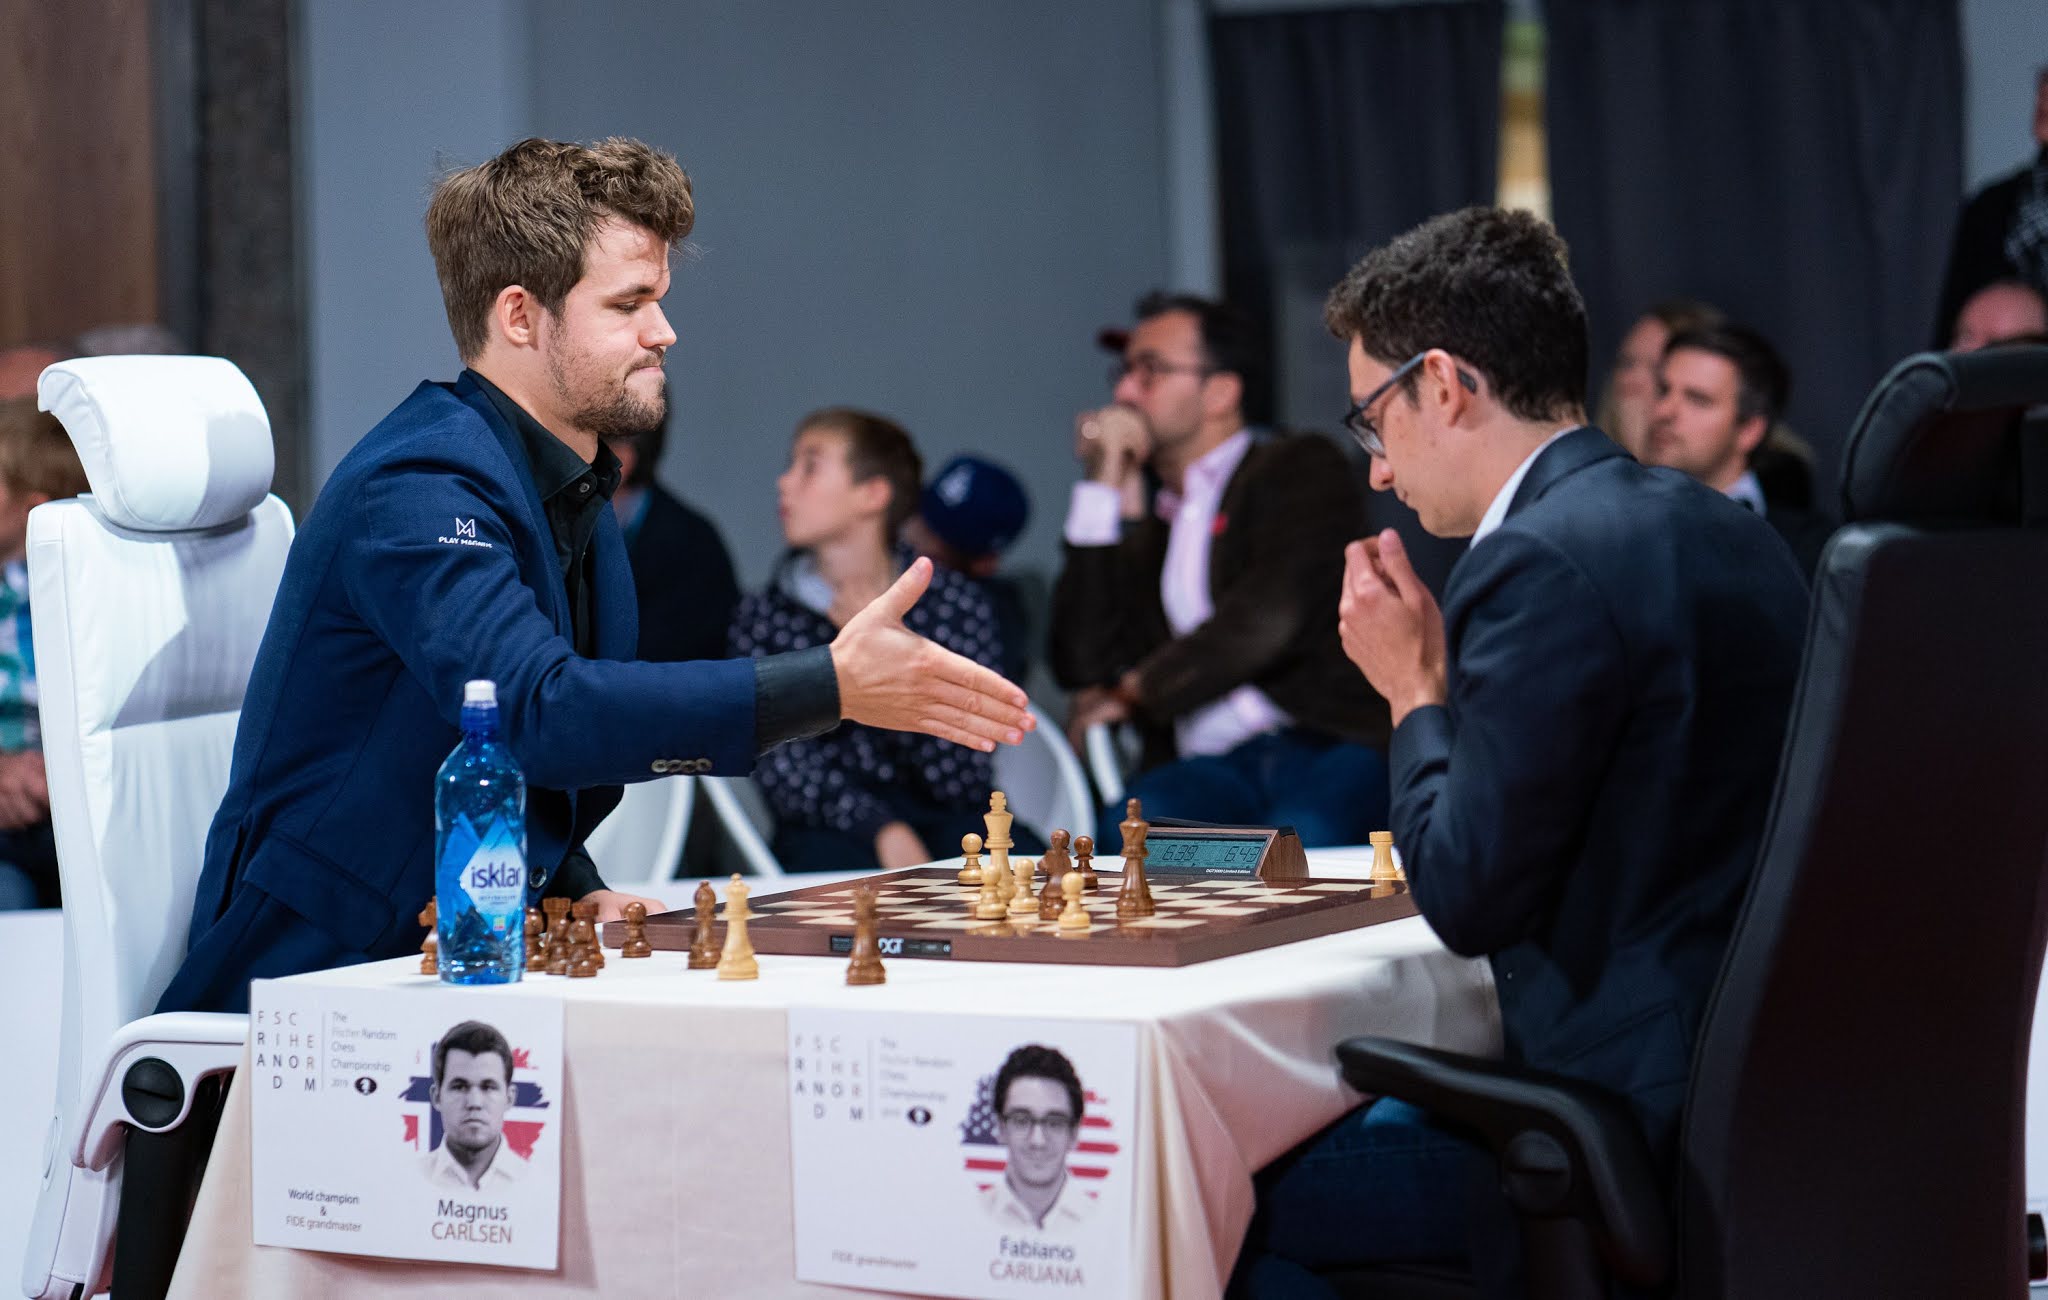 Filipino-American grandmaster Wesley So stuns Magnus Carlsen